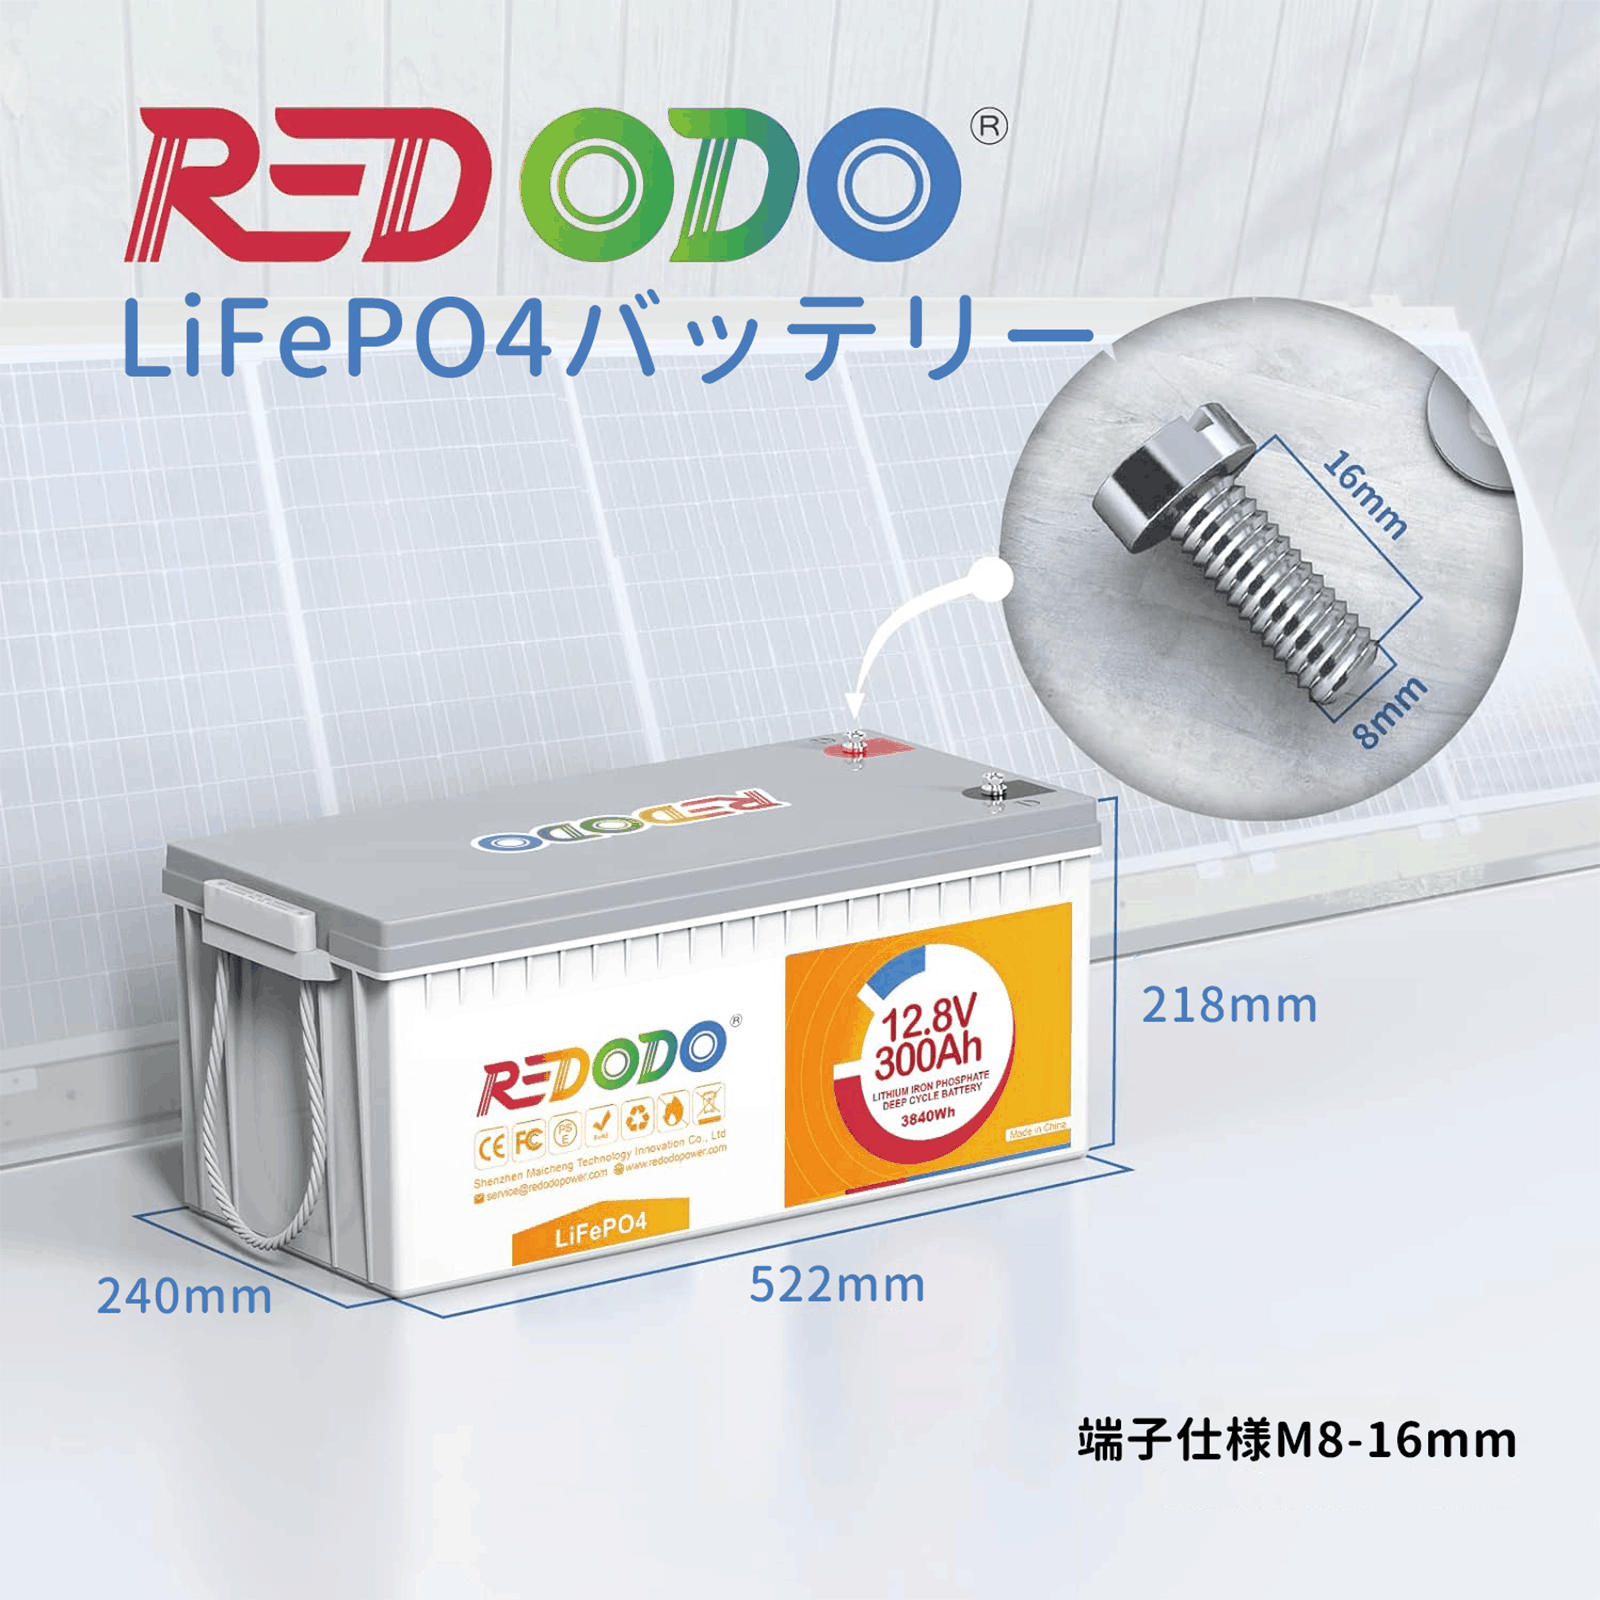 Redodo 12V 300Ah LiFePO4 Lithium Iron Phosphate Battery